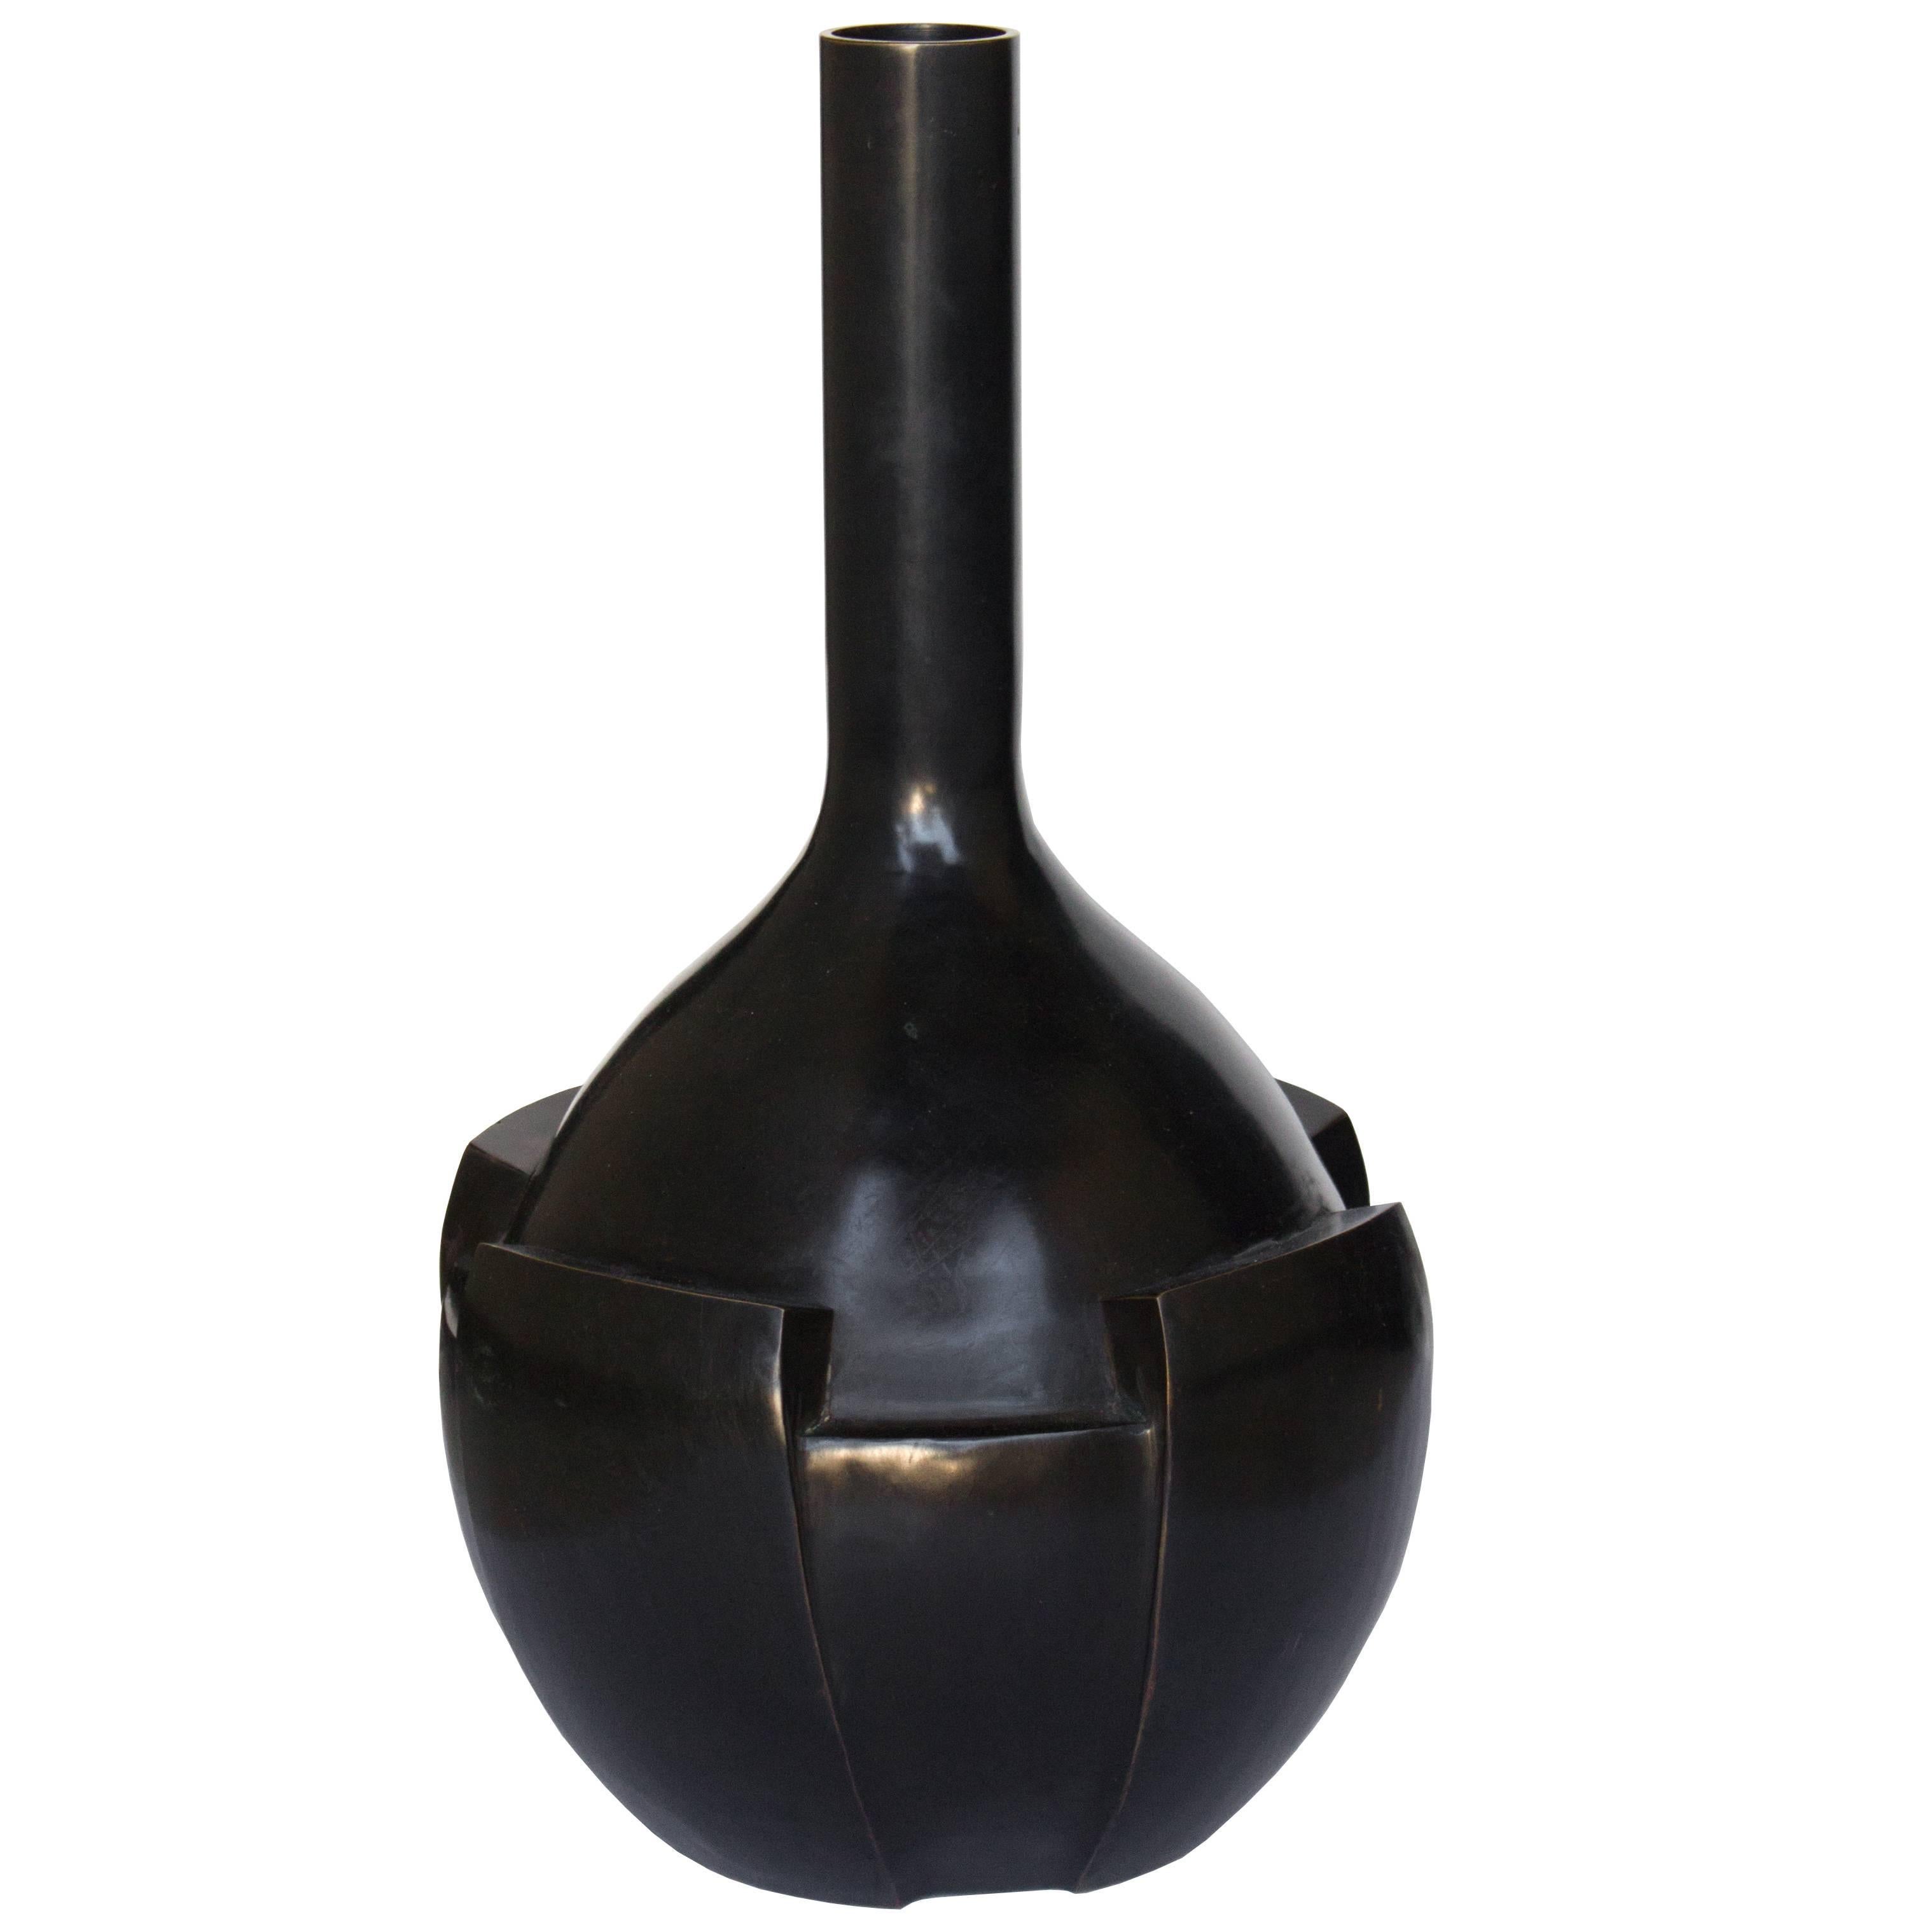 Thomas Pheasant Petal Vase in Dark Bronze